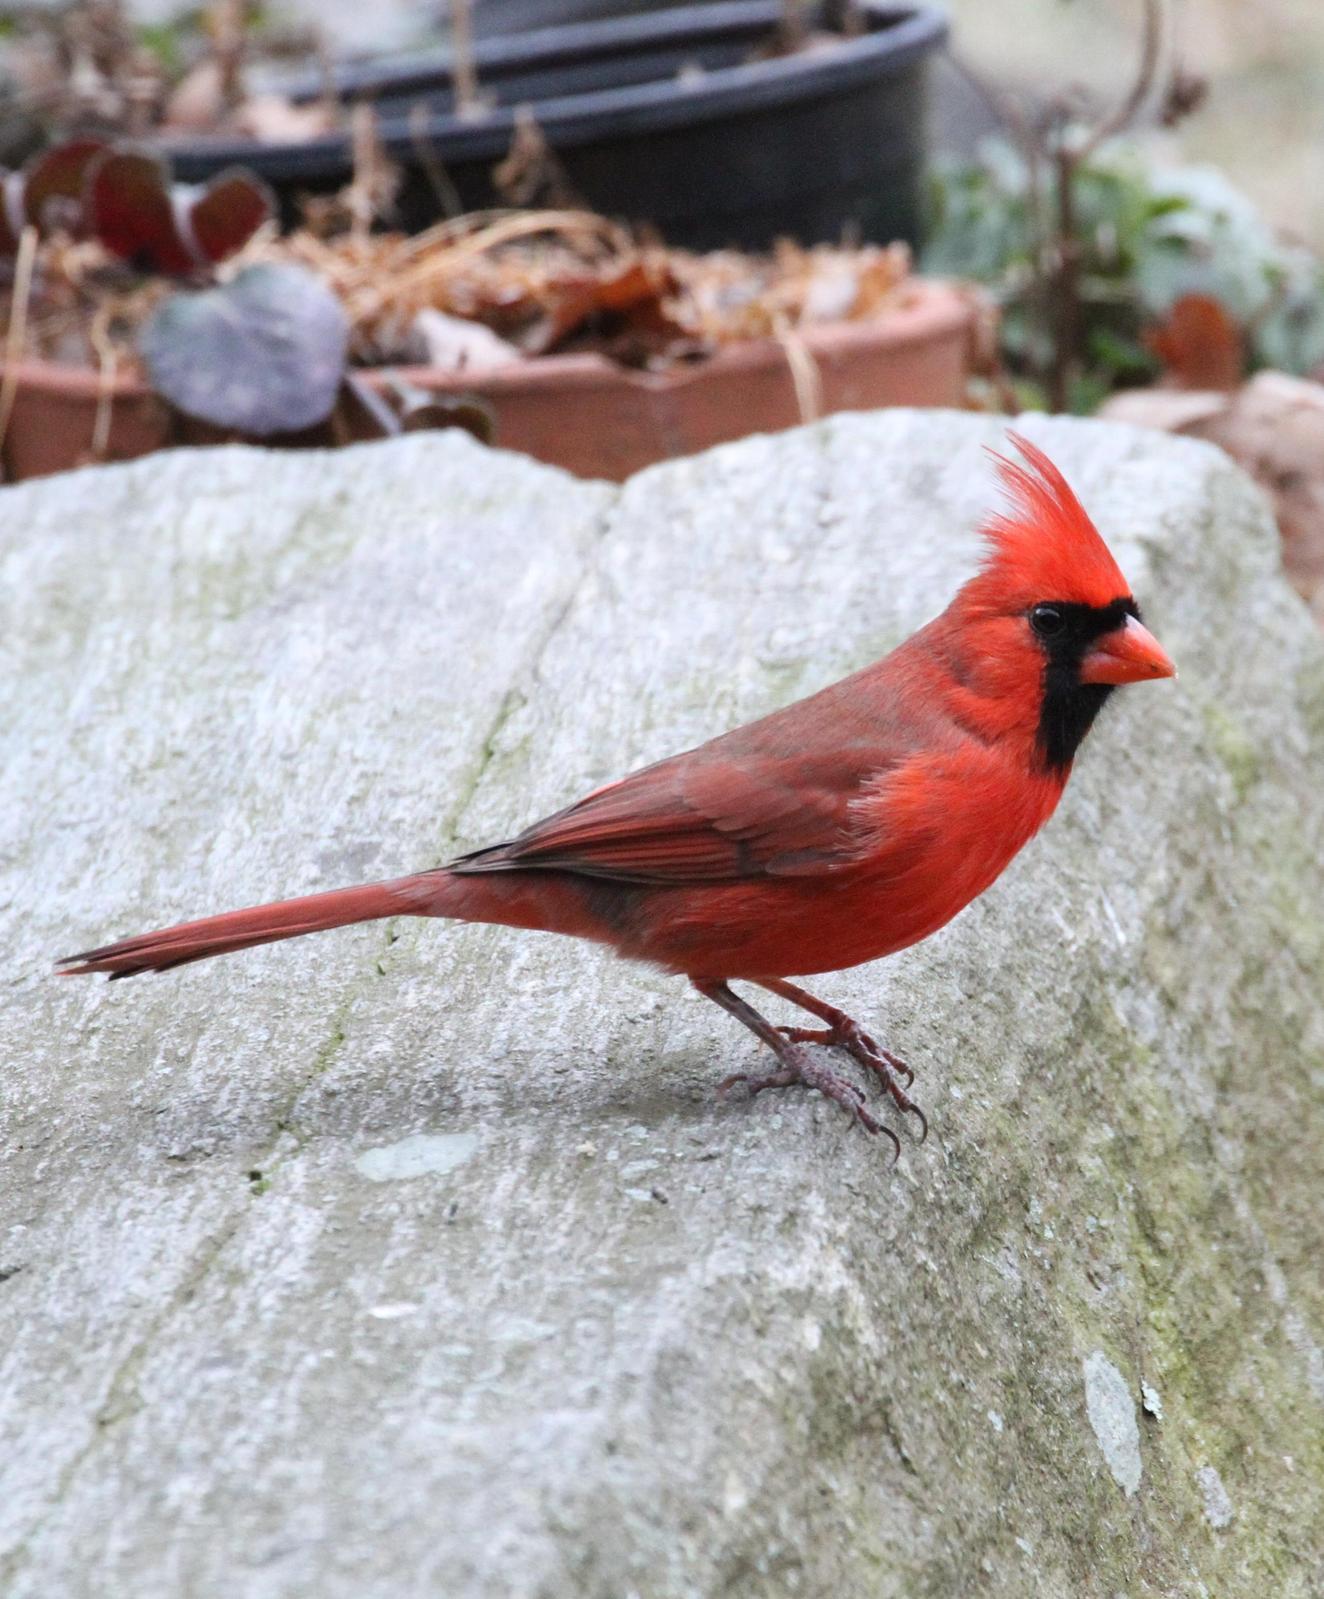 Northern Cardinal Photo by Kim Beard